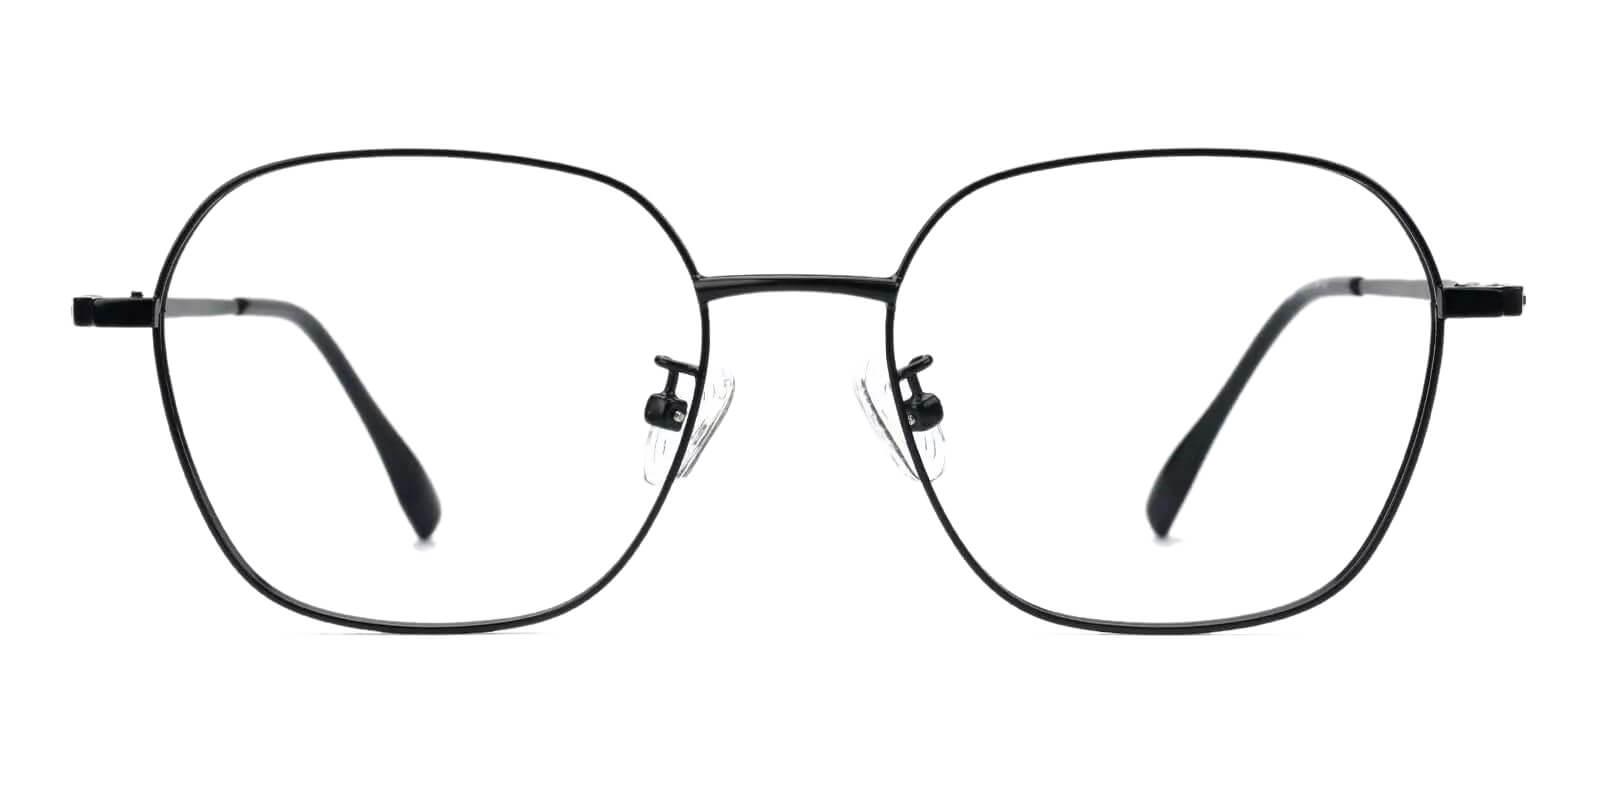 Ruff Black Metal Eyeglasses , Fashion , NosePads Frames from ABBE Glasses